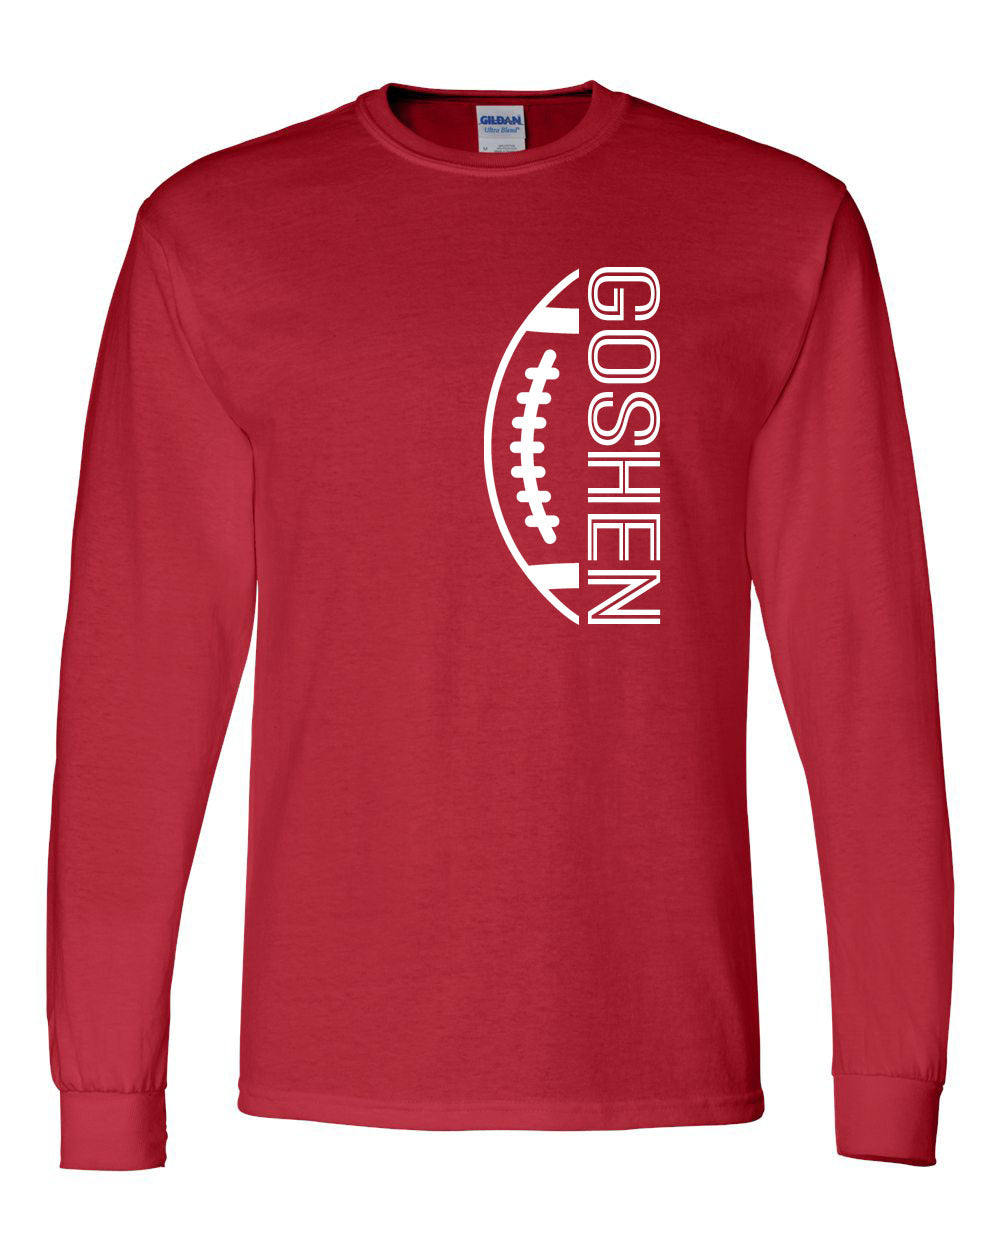 Side Goshen Football Long Sleeve Shirt